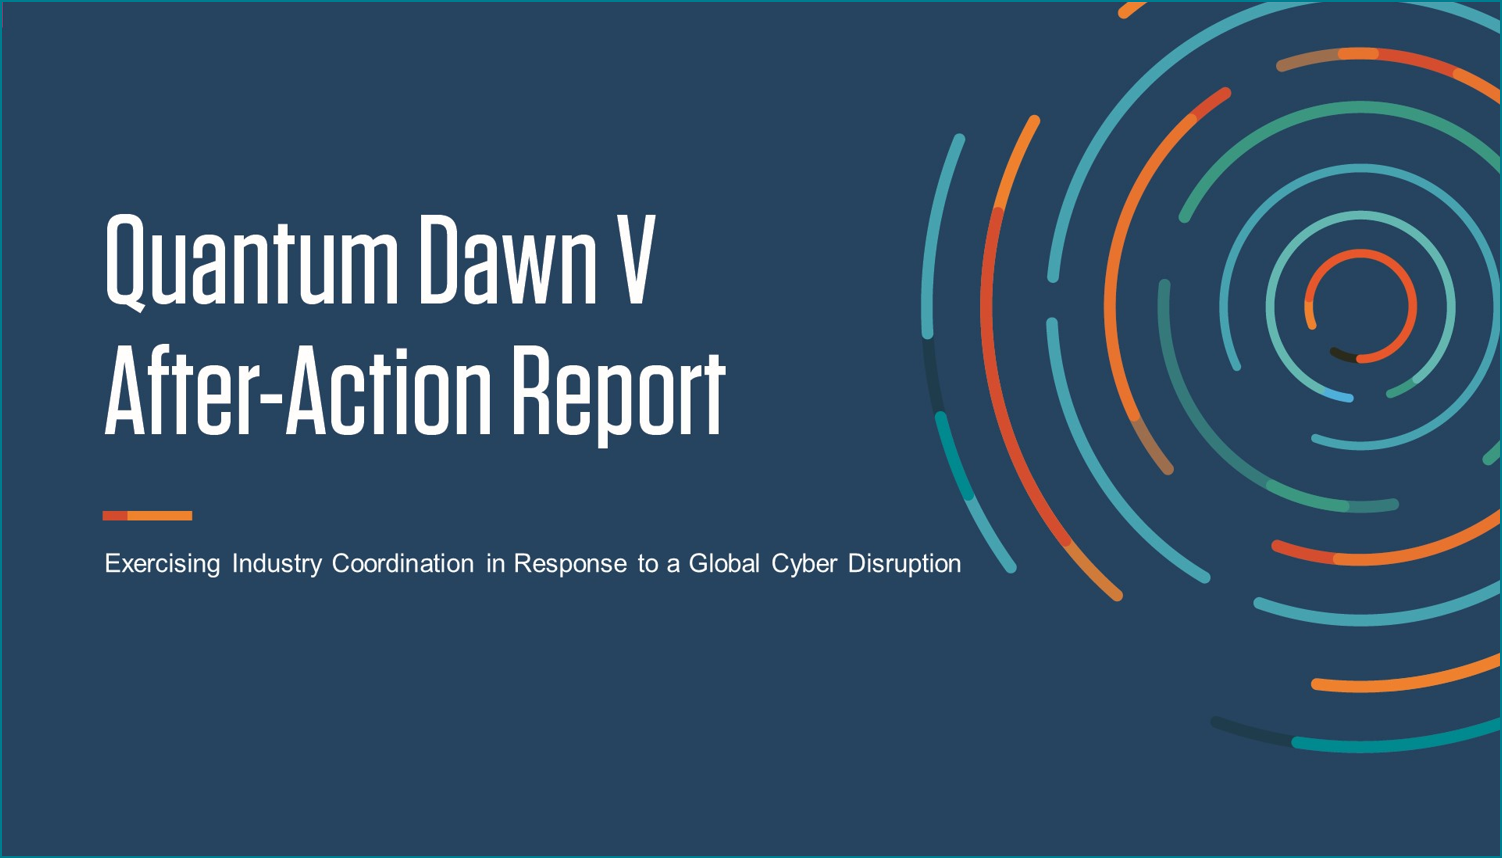 Quantum Dawn V After-Action Report